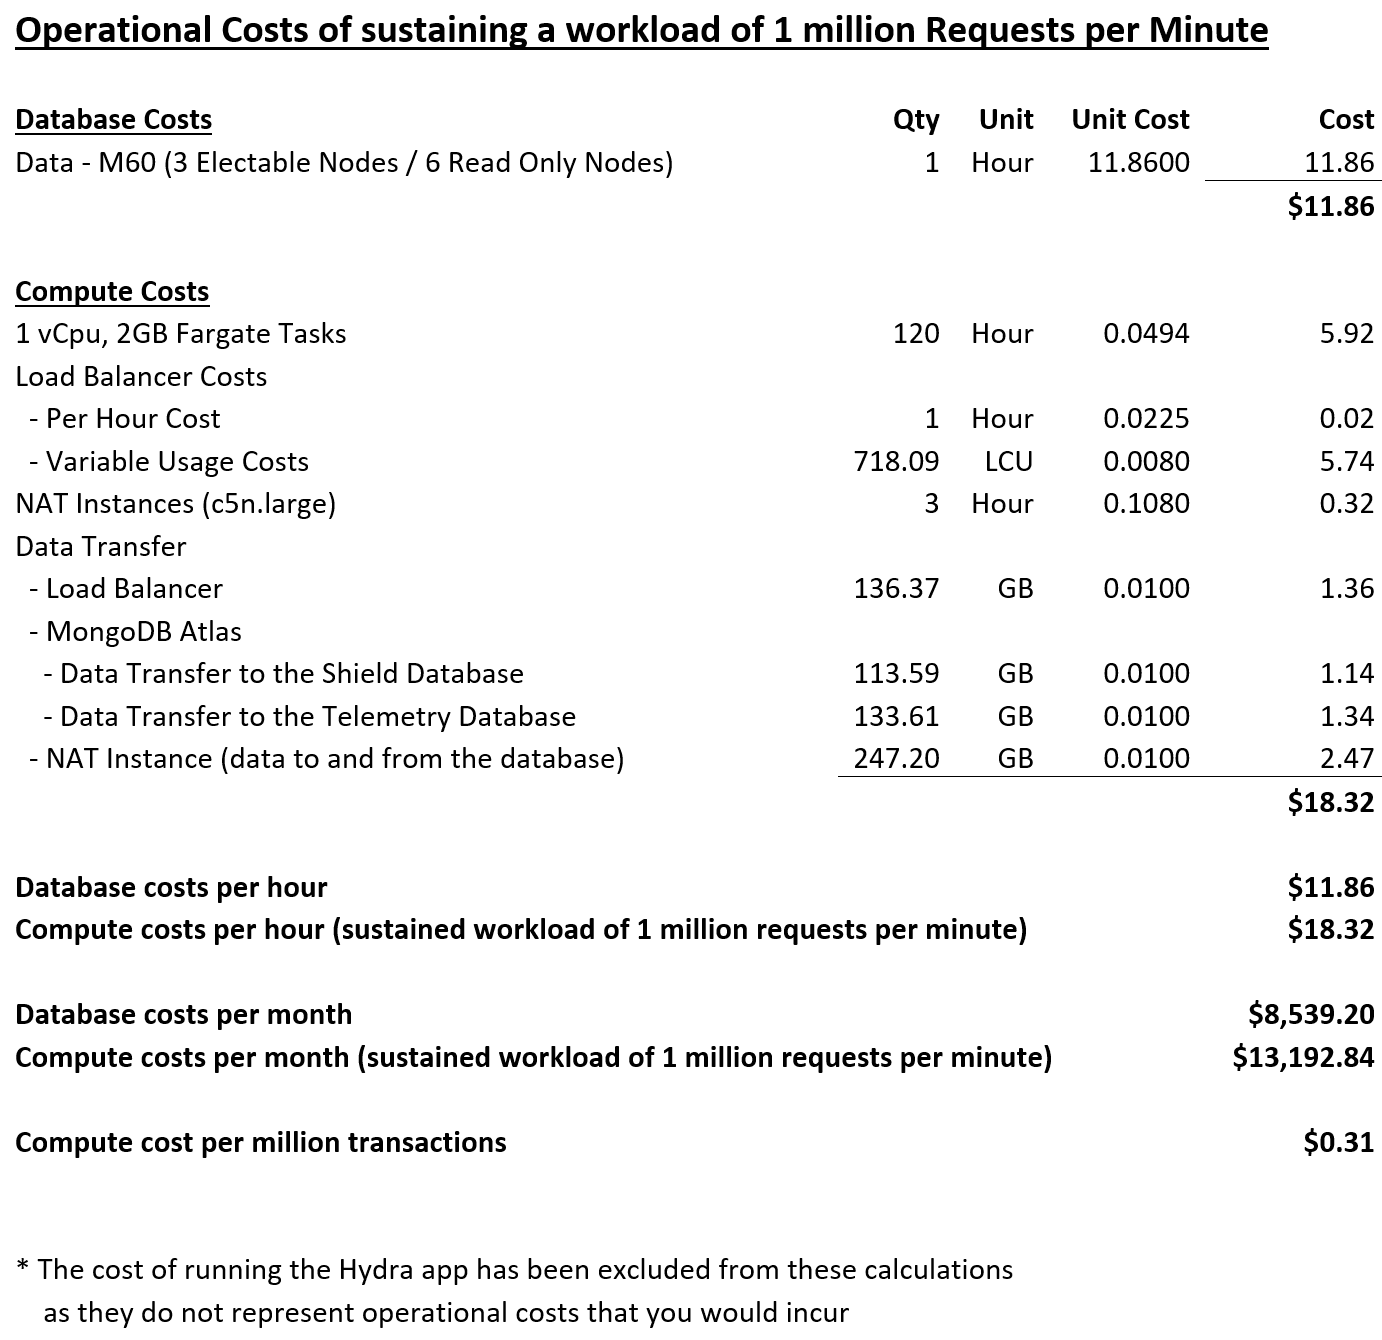 Cost Summary